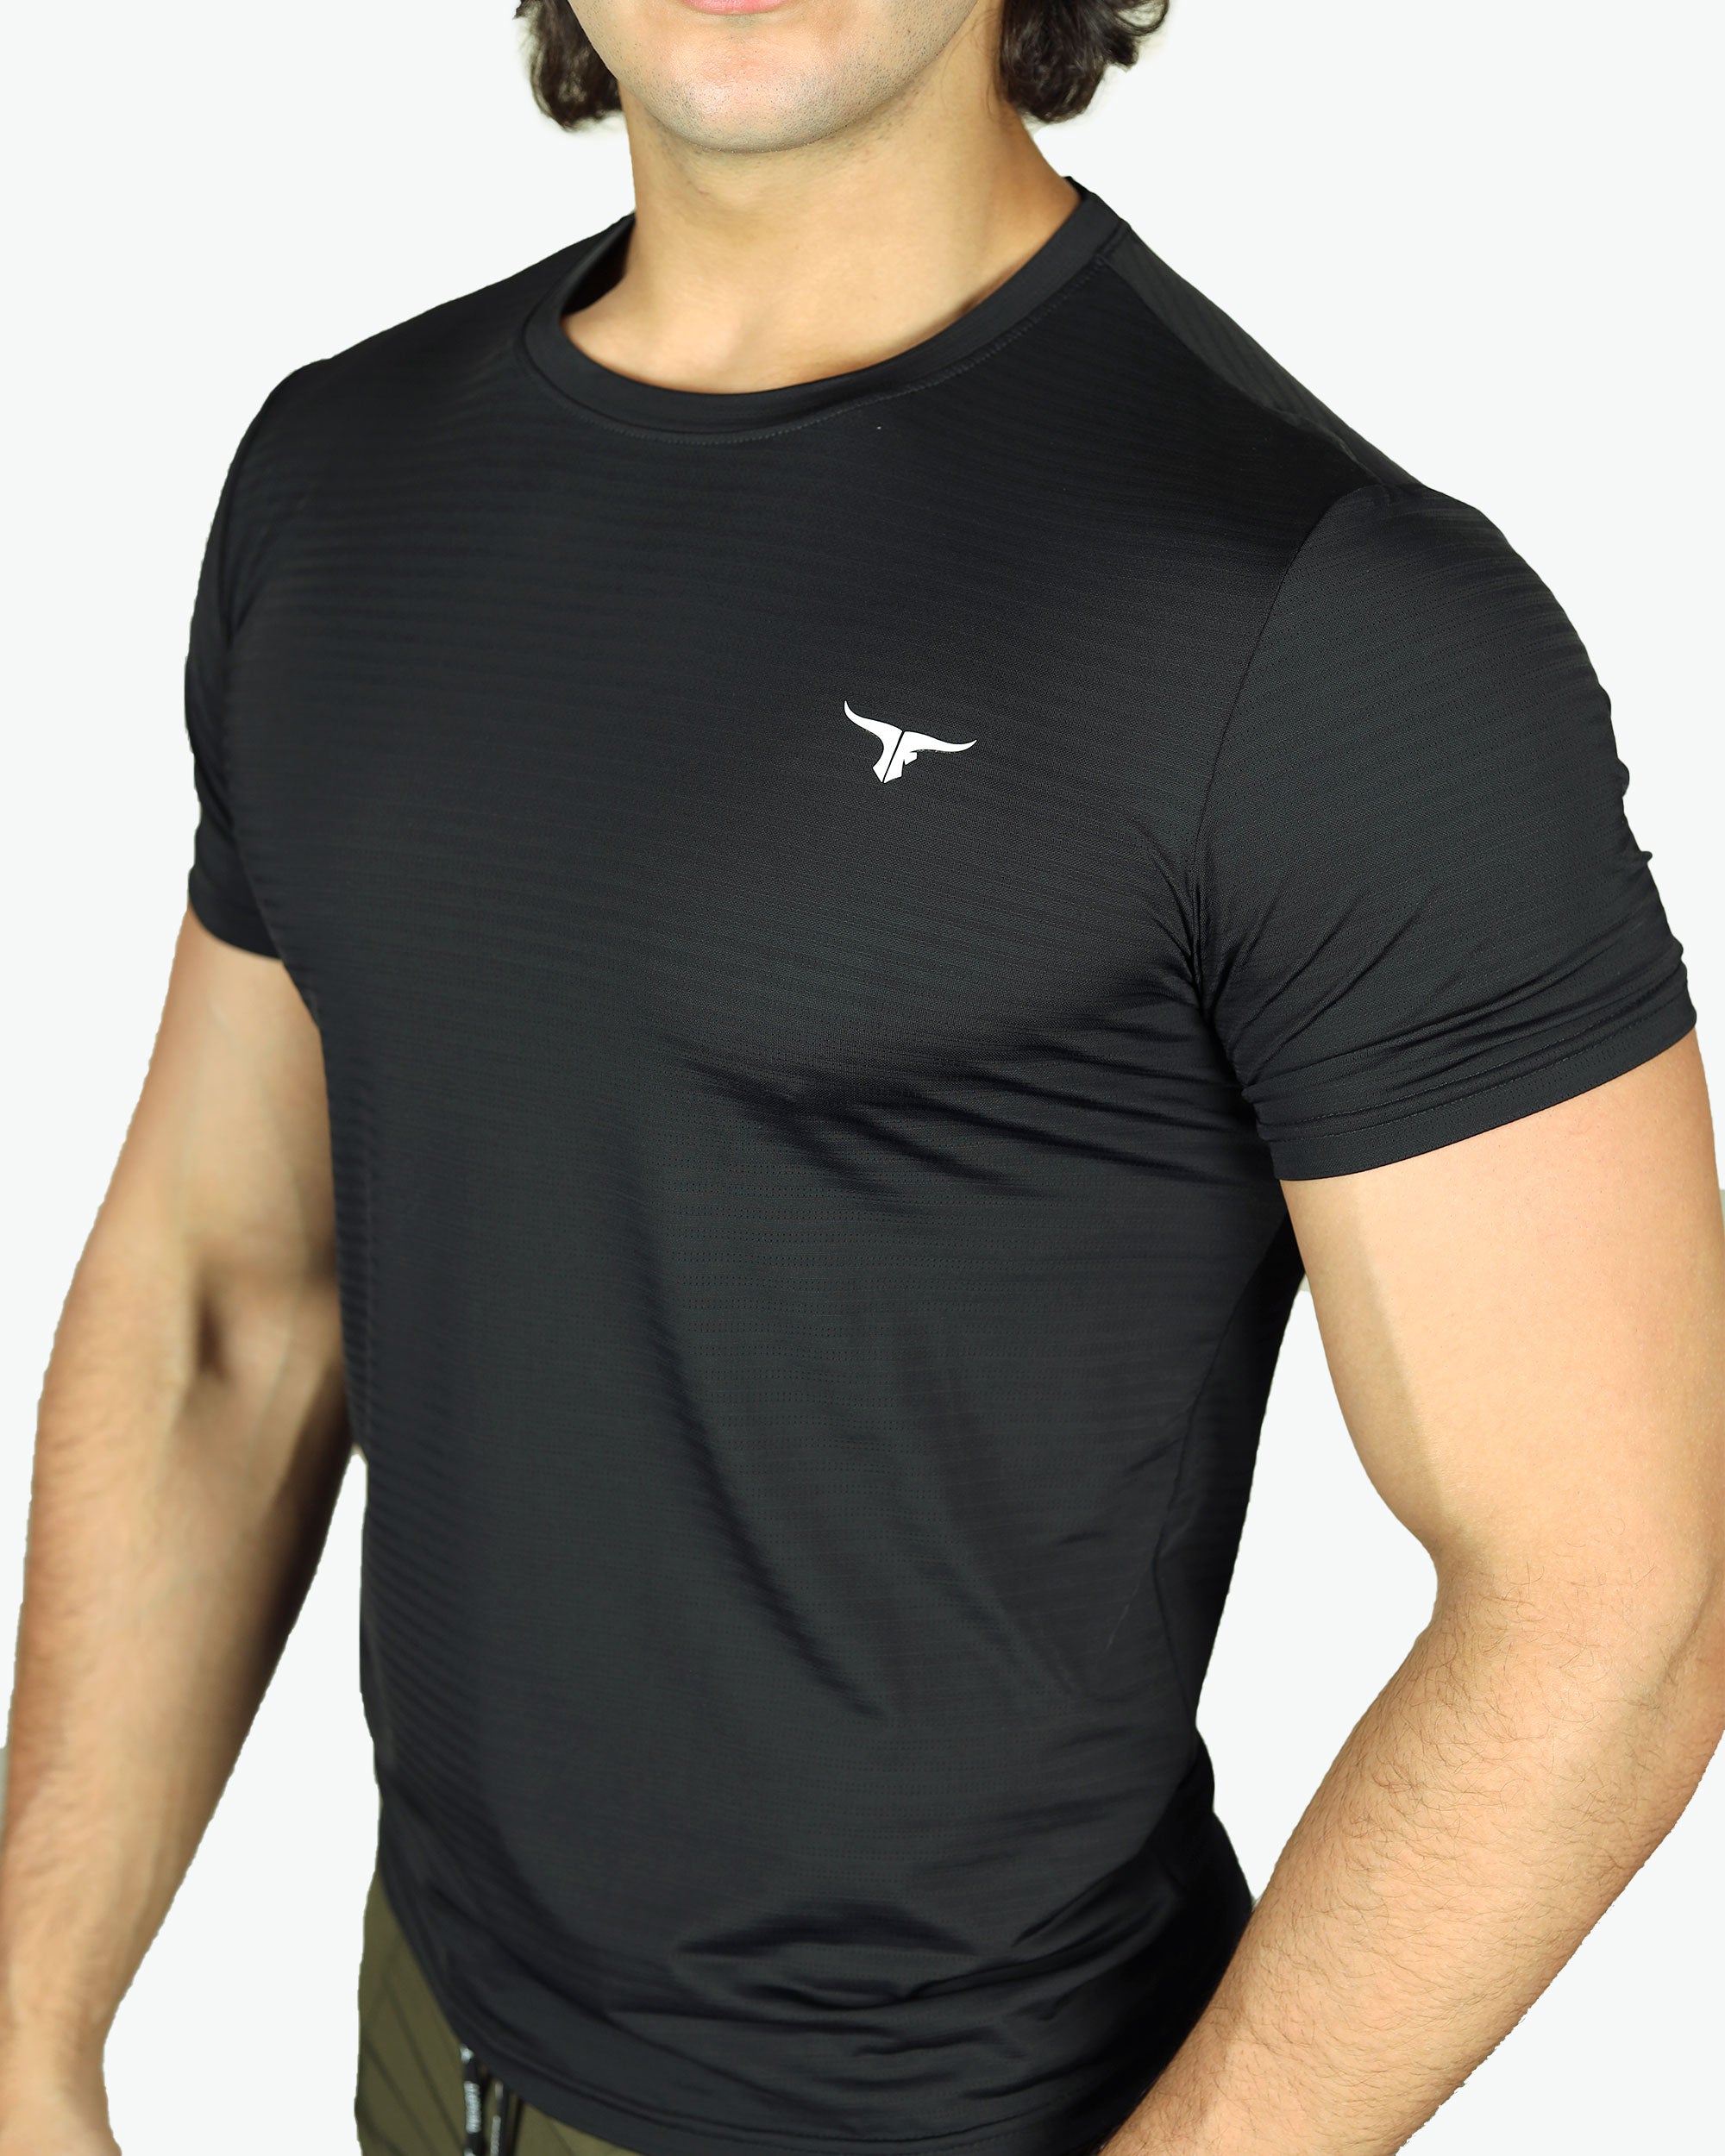 AirmanArmorMuscle Fit T-Shirt - THUGFIT